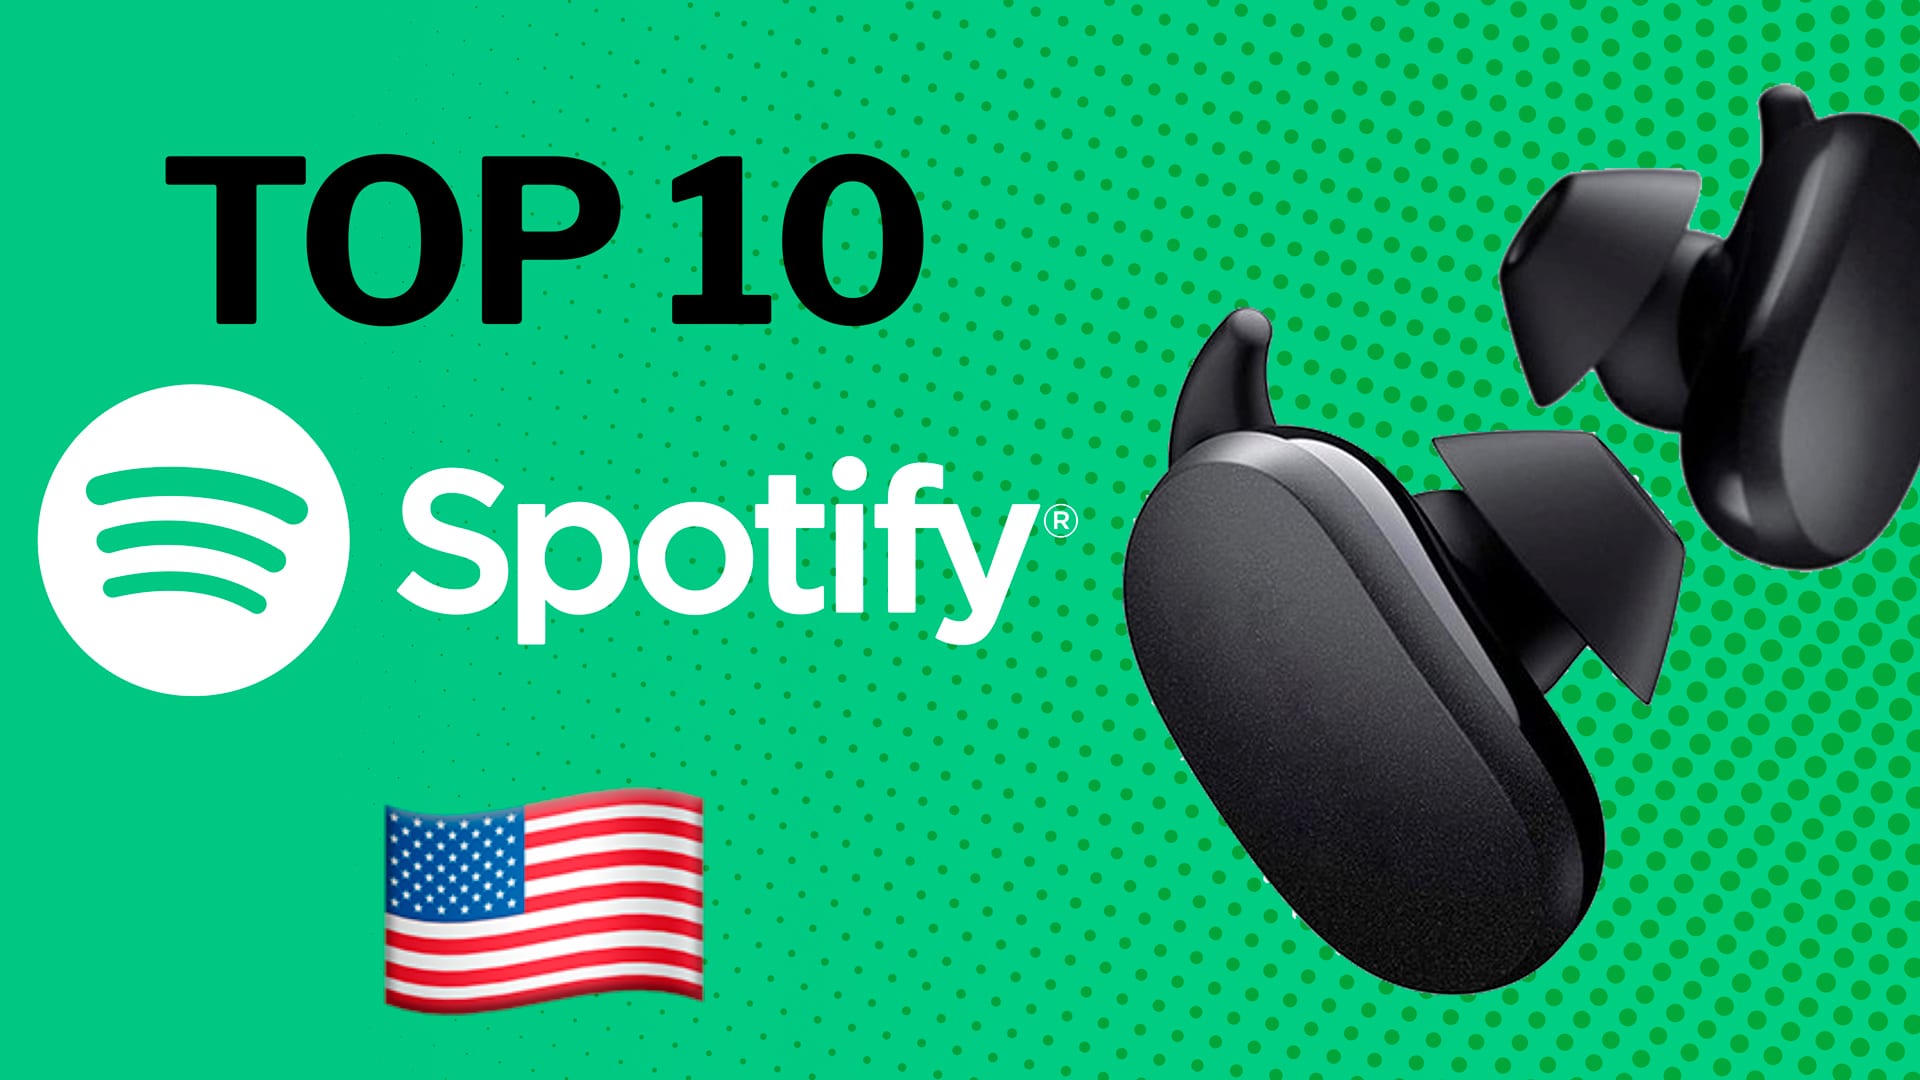 Escuchar música para dormir: La lista de Spotify - Neural